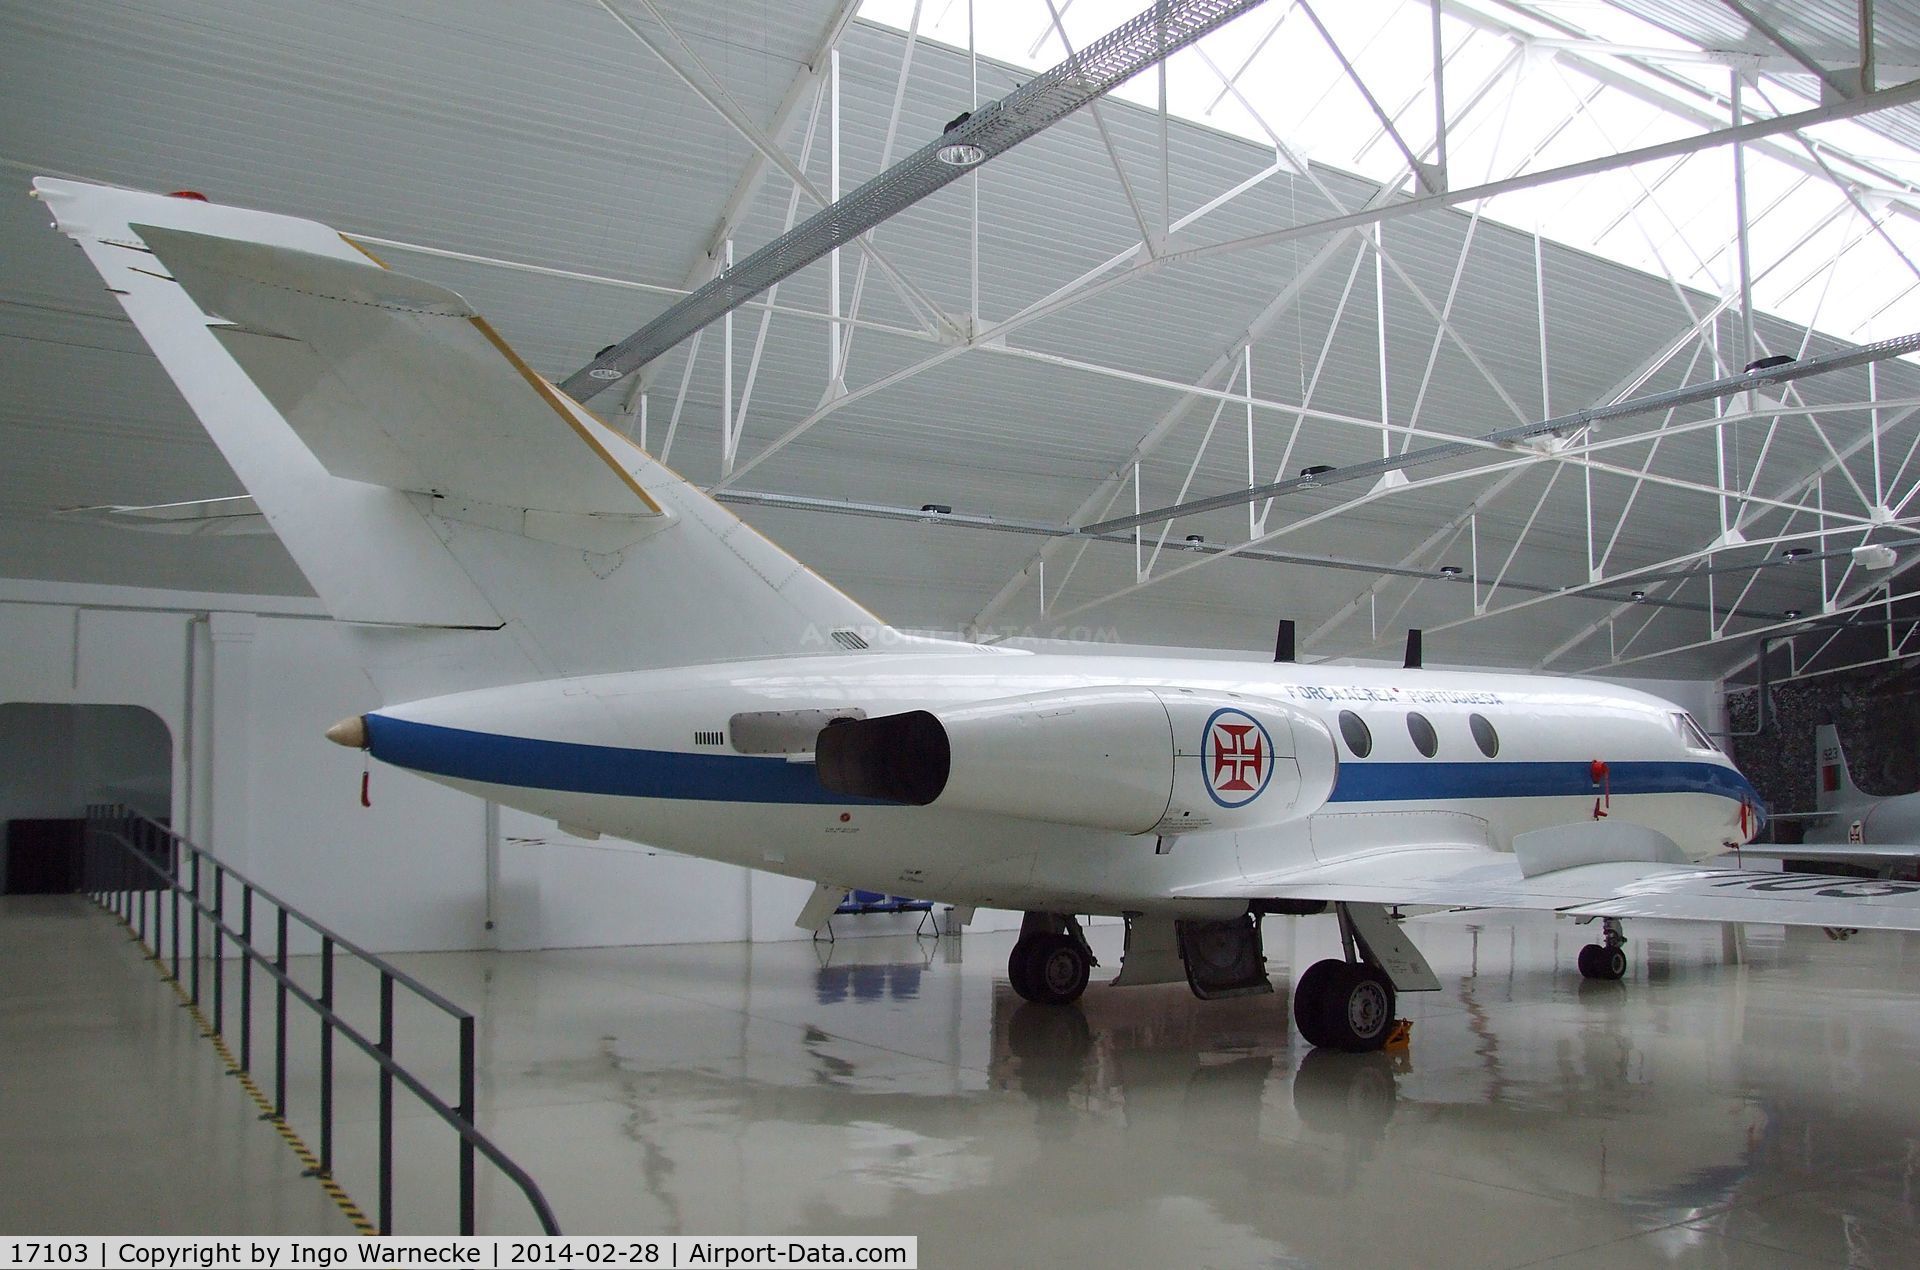 17103, 1969 Dassault Falcon (Mystere) 20DC C/N 217, Dassault Mystere / Falcon 20DC at the Museu do Ar, Sintra